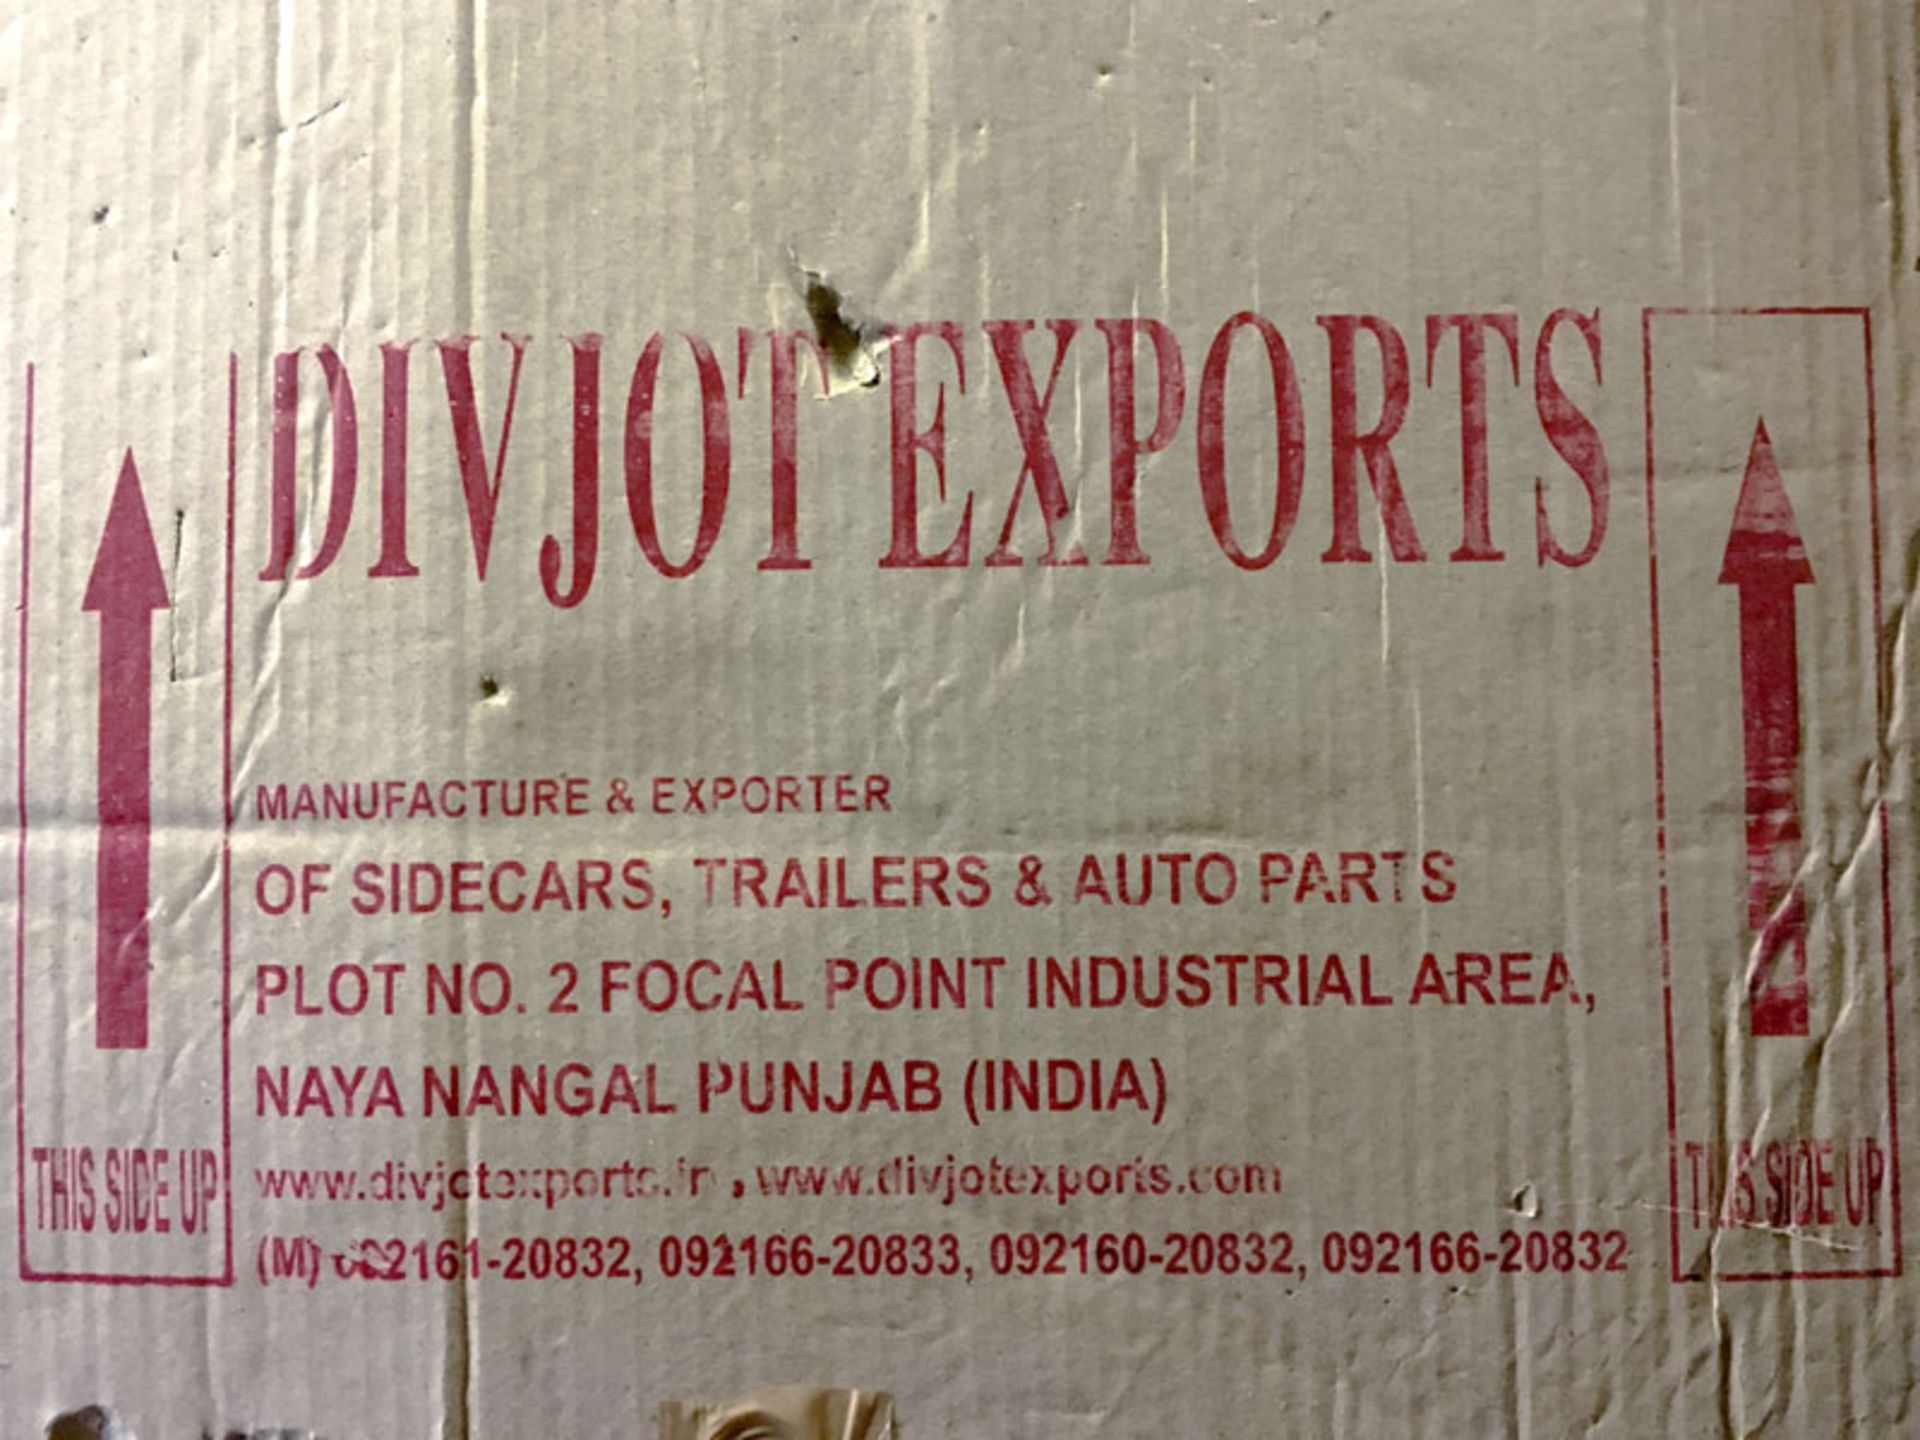 Divjot Exports Sidecar - Image 5 of 5